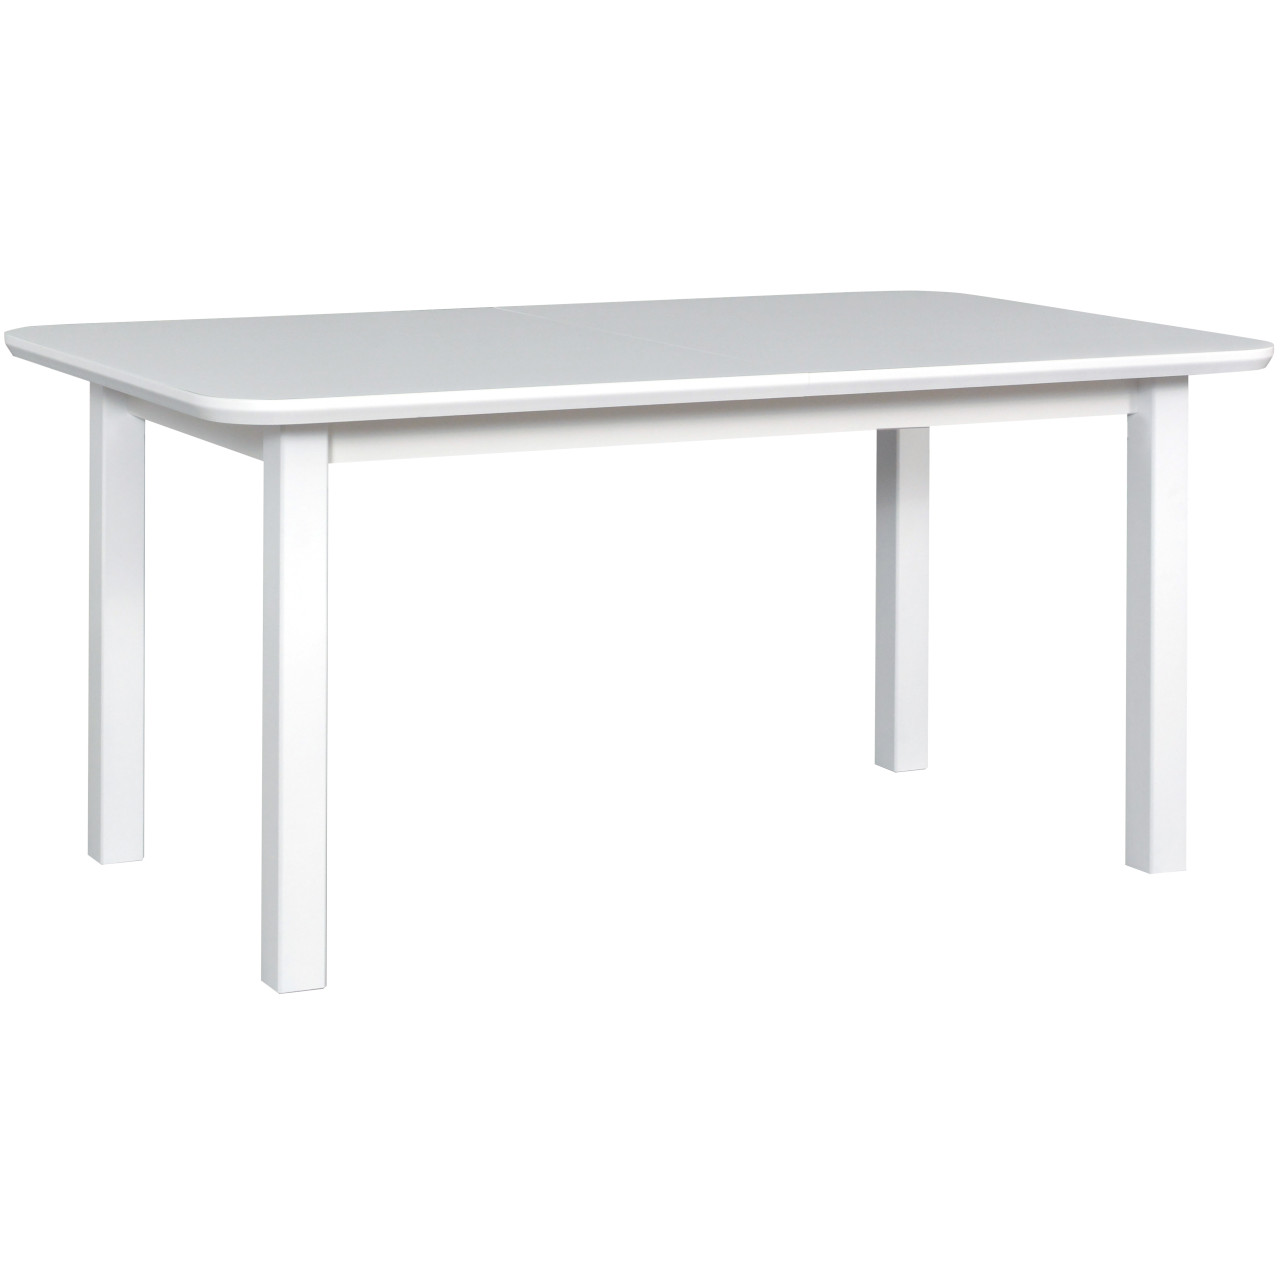 Stôl WENUS 5 S 90x160/200 biely, dubová dyha